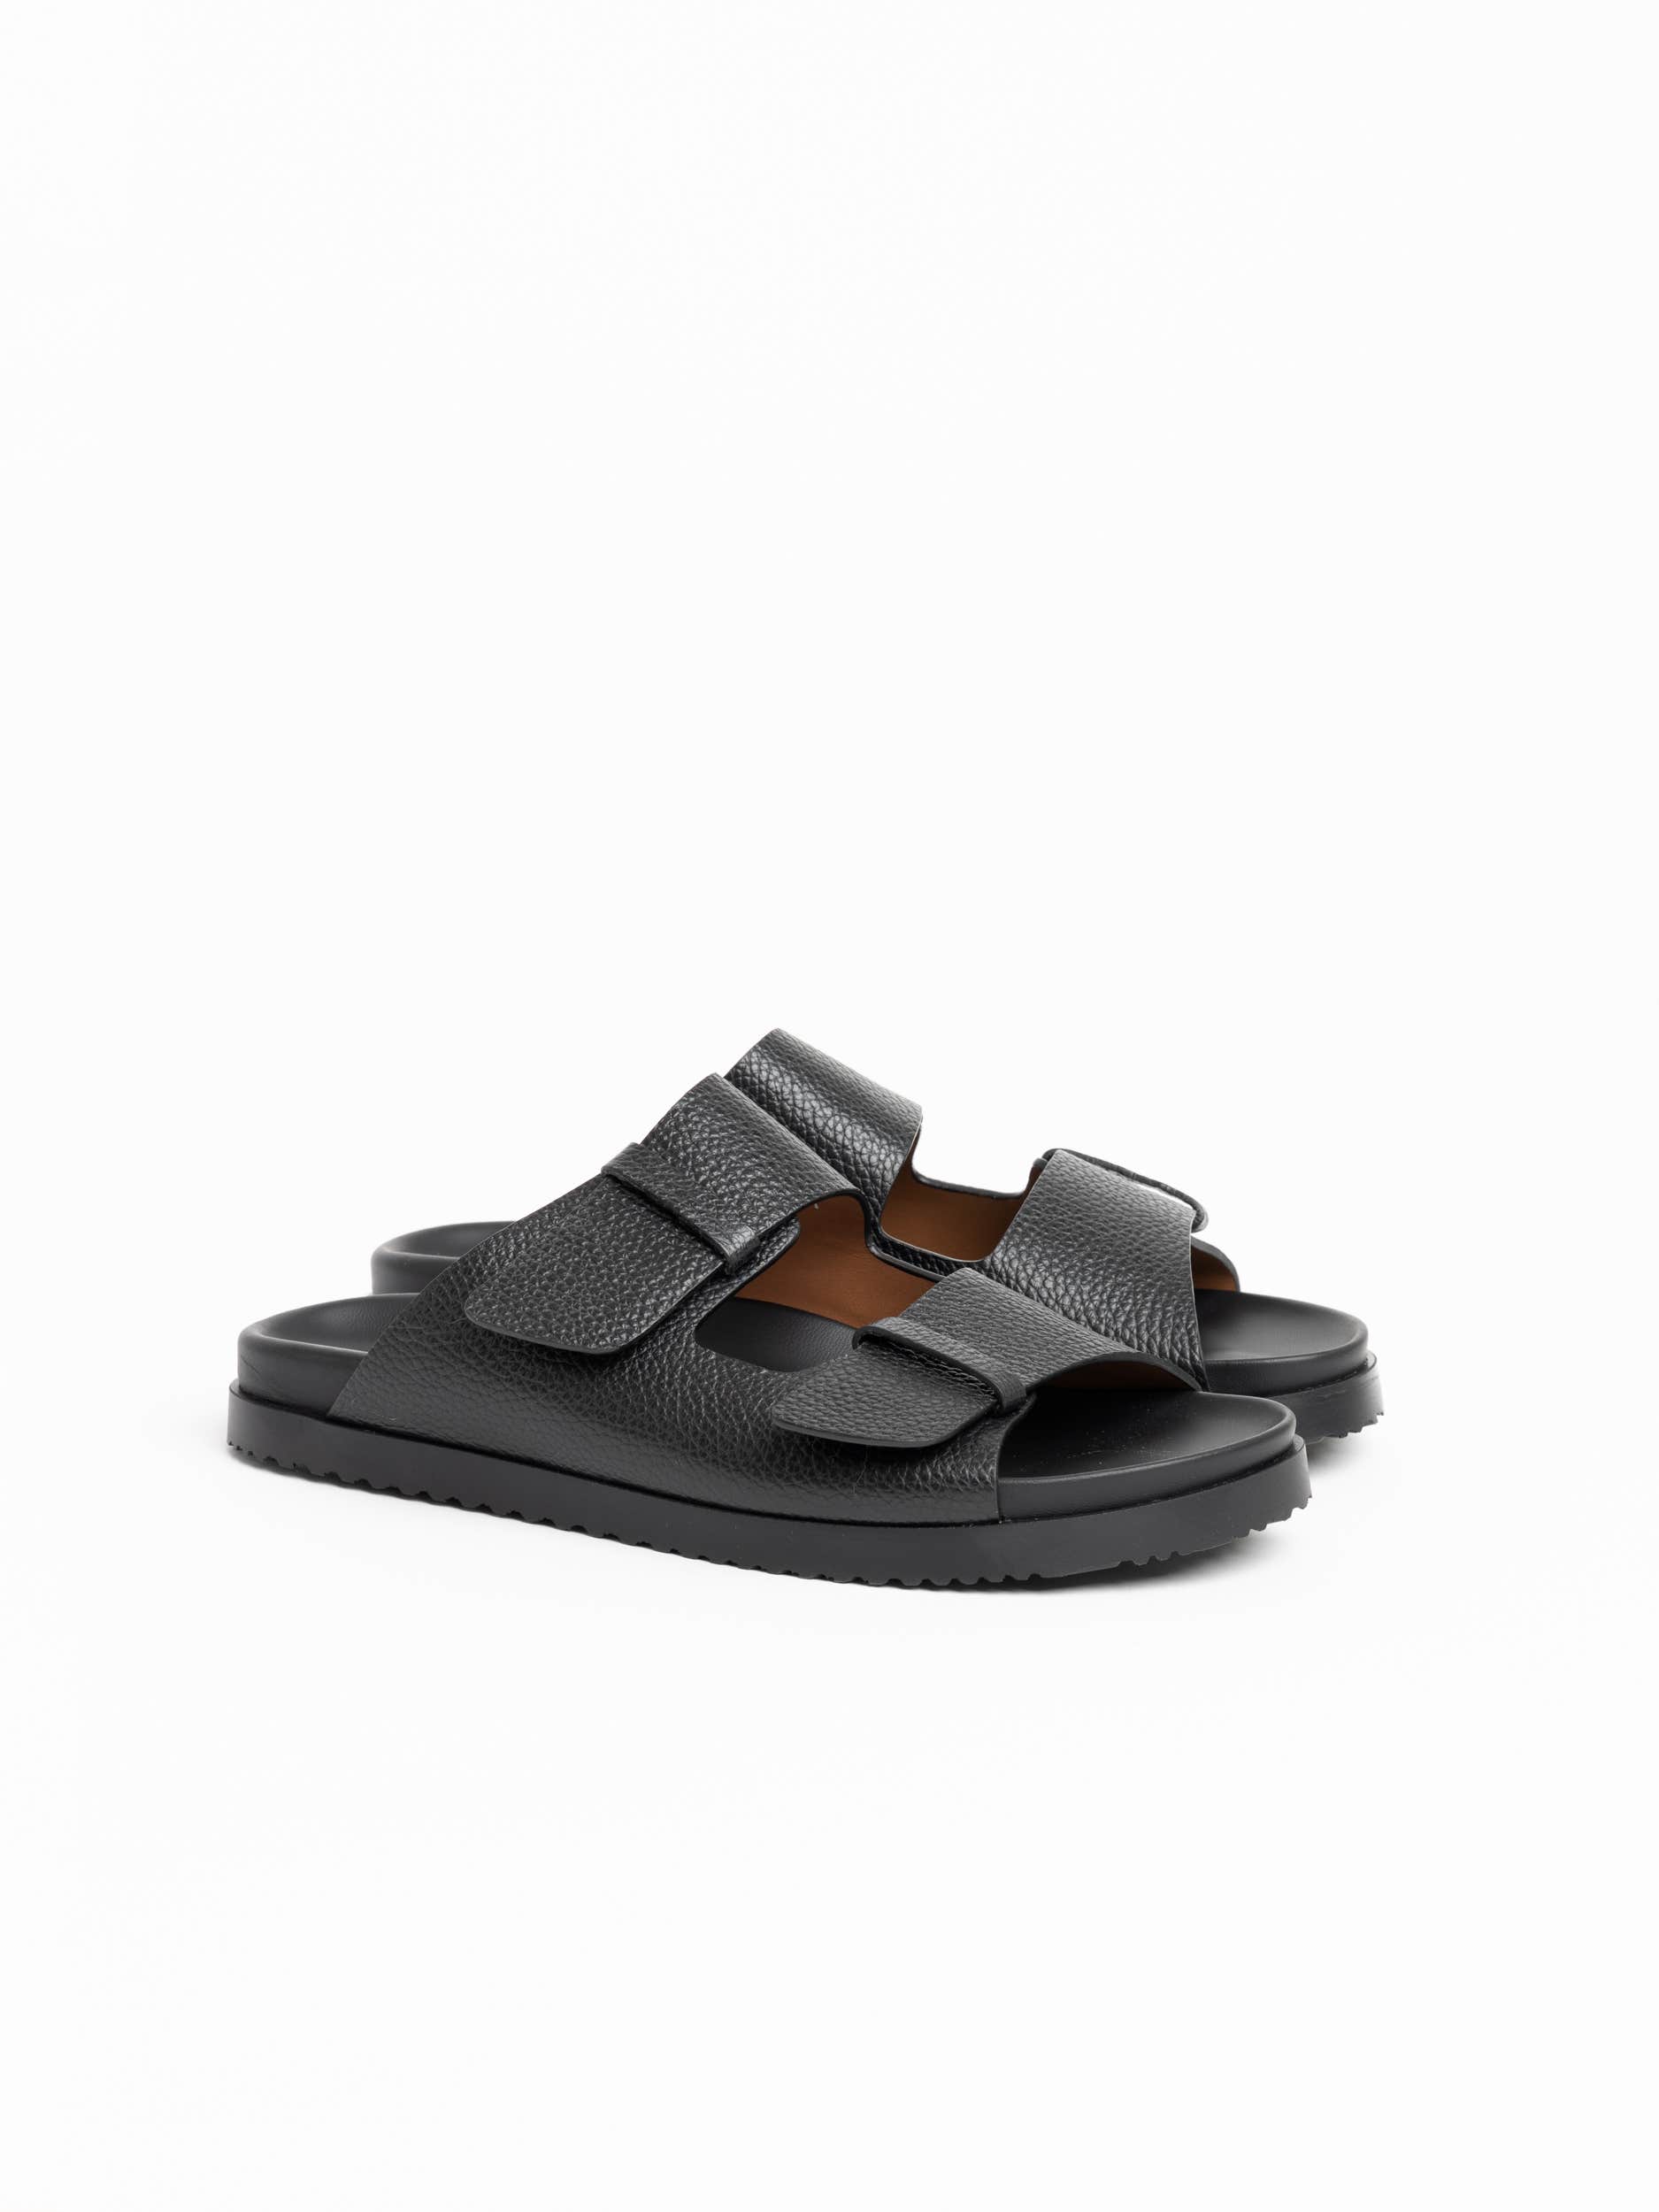 Black Double-Strap Leather Sandals